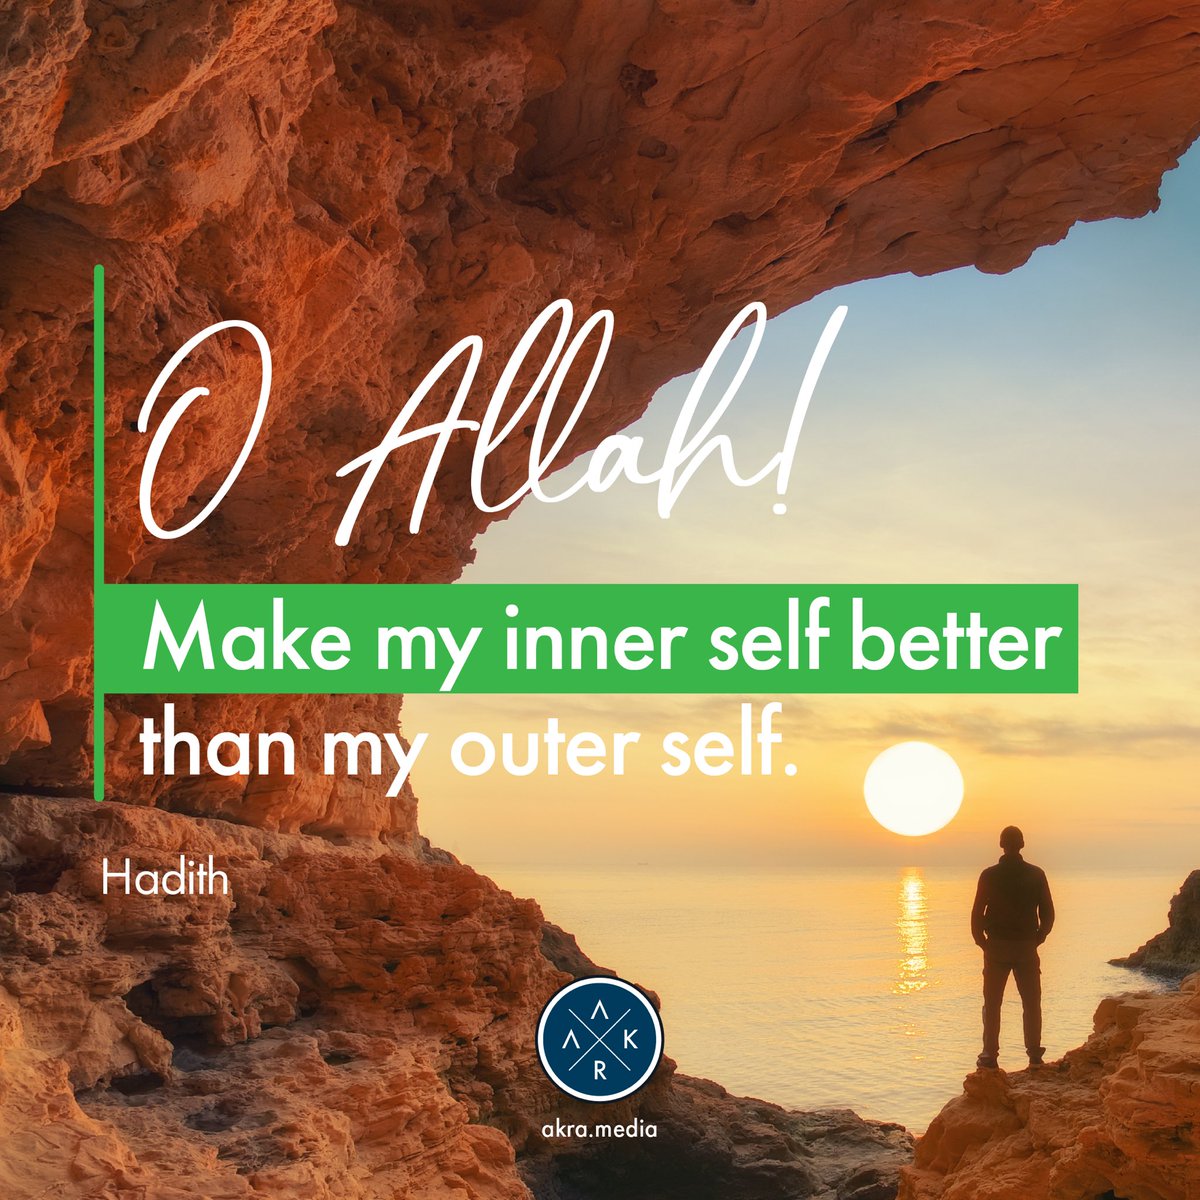 O Allah! 
Make my inner self better than my outer self!

#hadith #hadithoftheday #dua #duaoftheday #makedua #jummamubarak #islamicquote #muslimworld #innerself #innerpeace